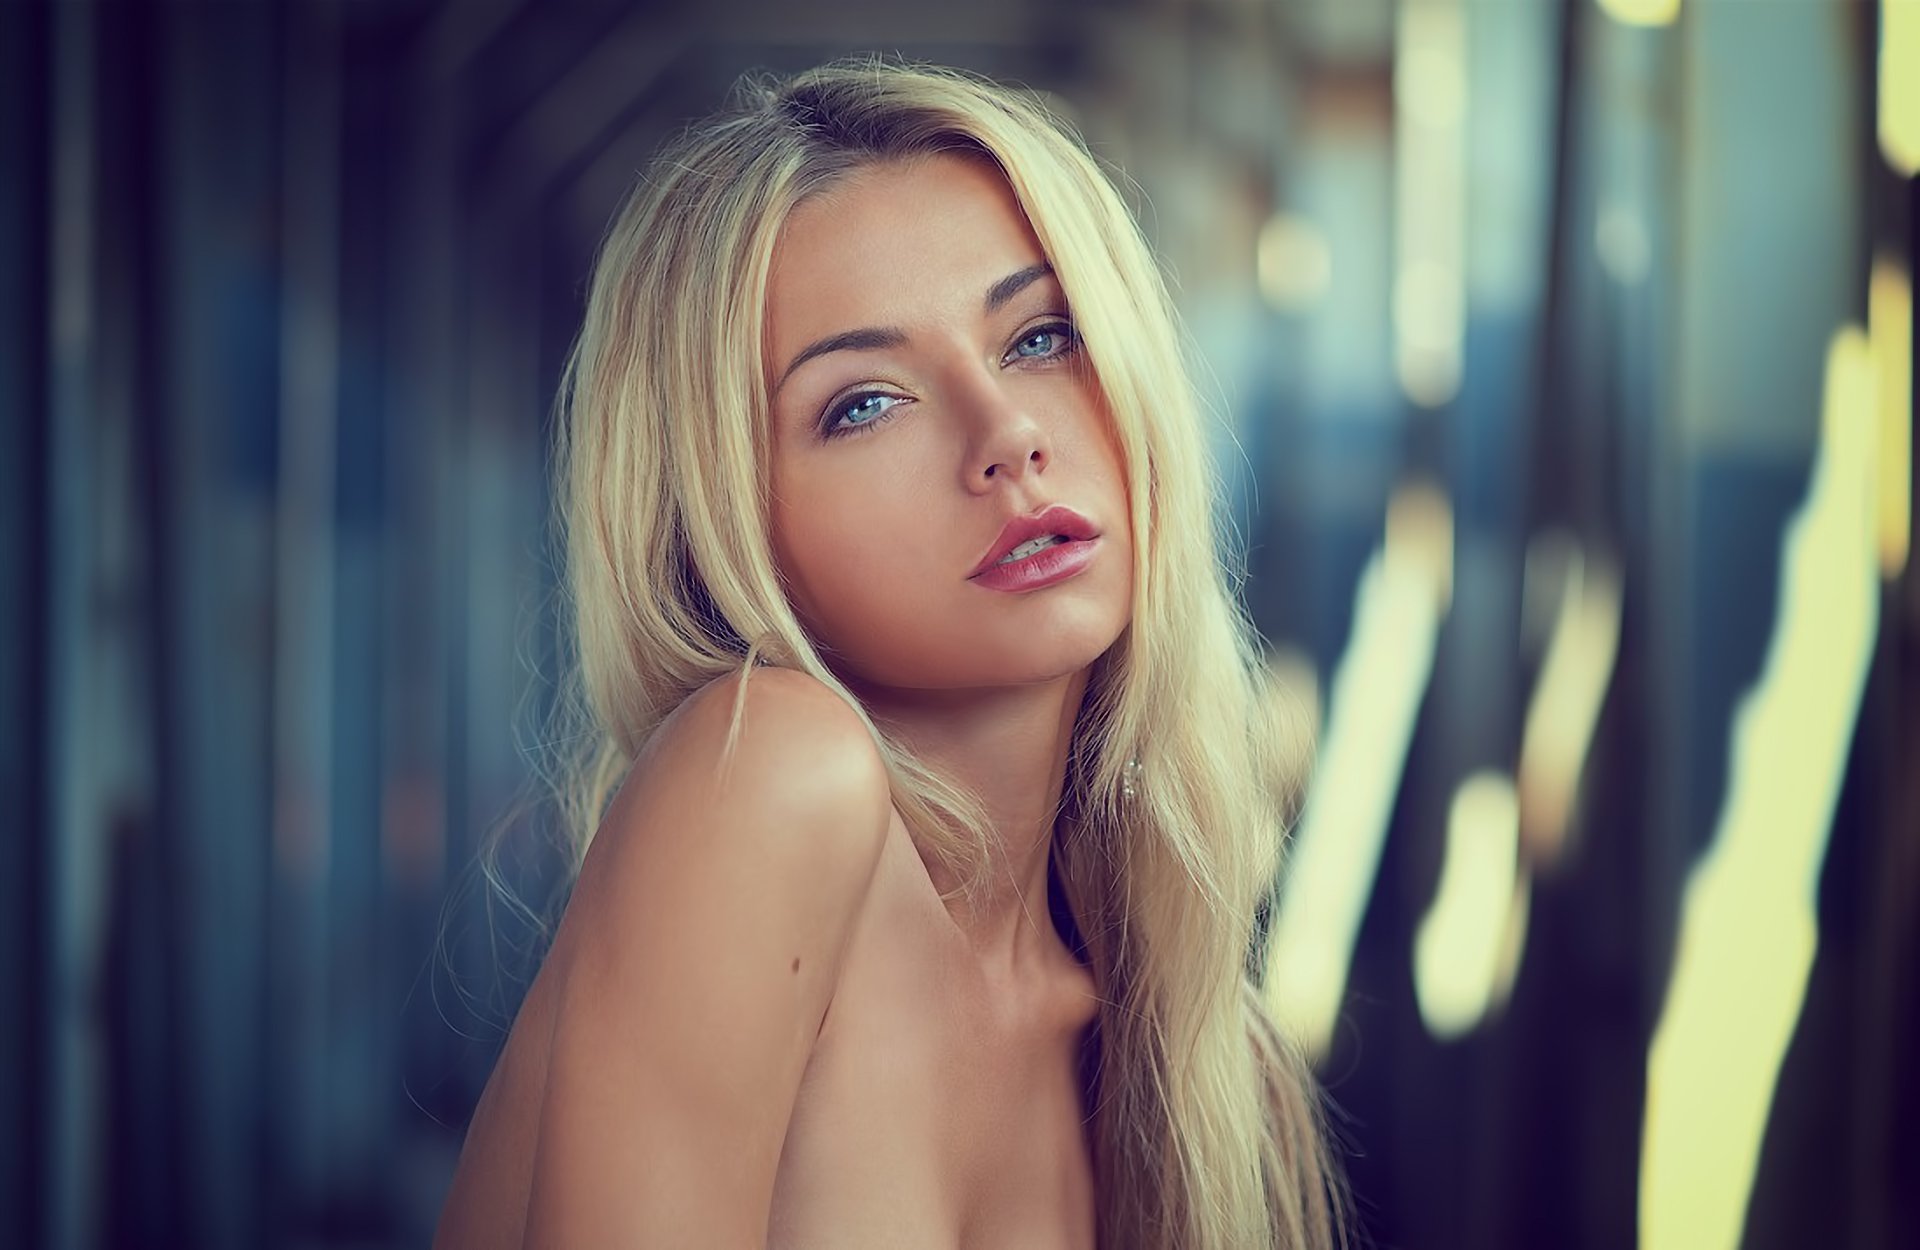 Amazingly beautiful blonde teen girl